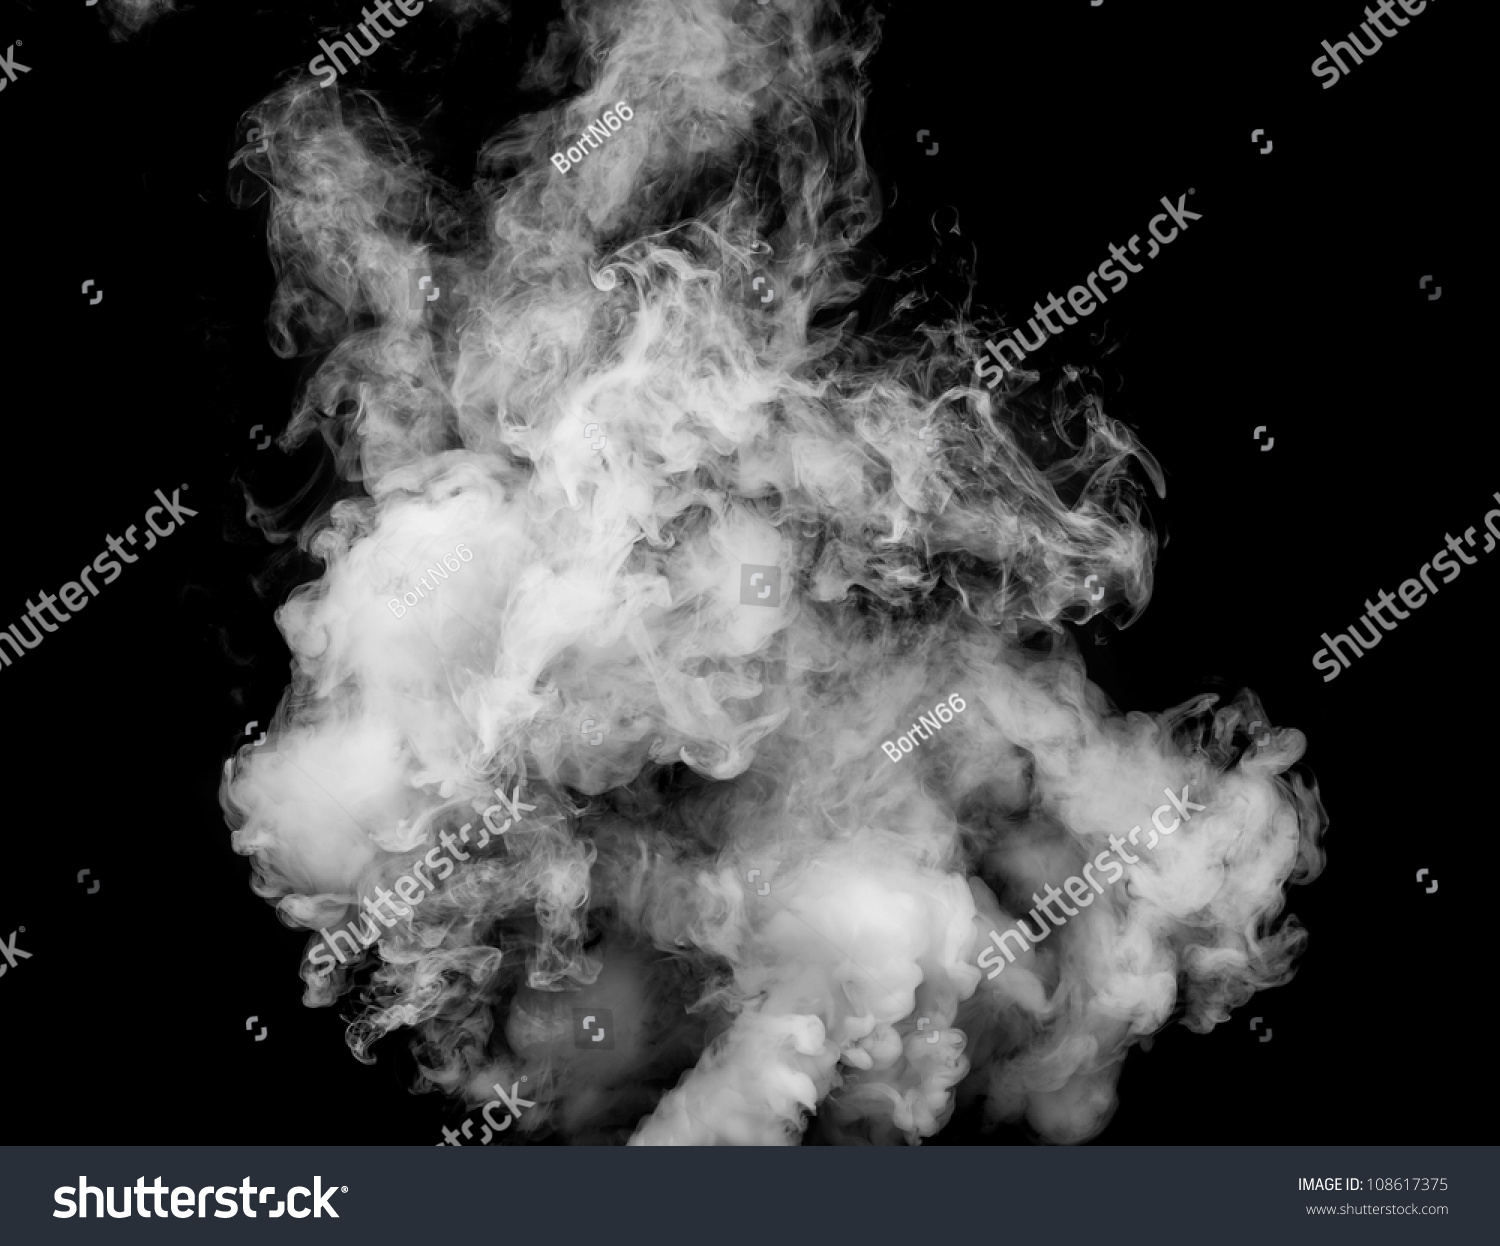 Smoke fragments on a black background #108617375